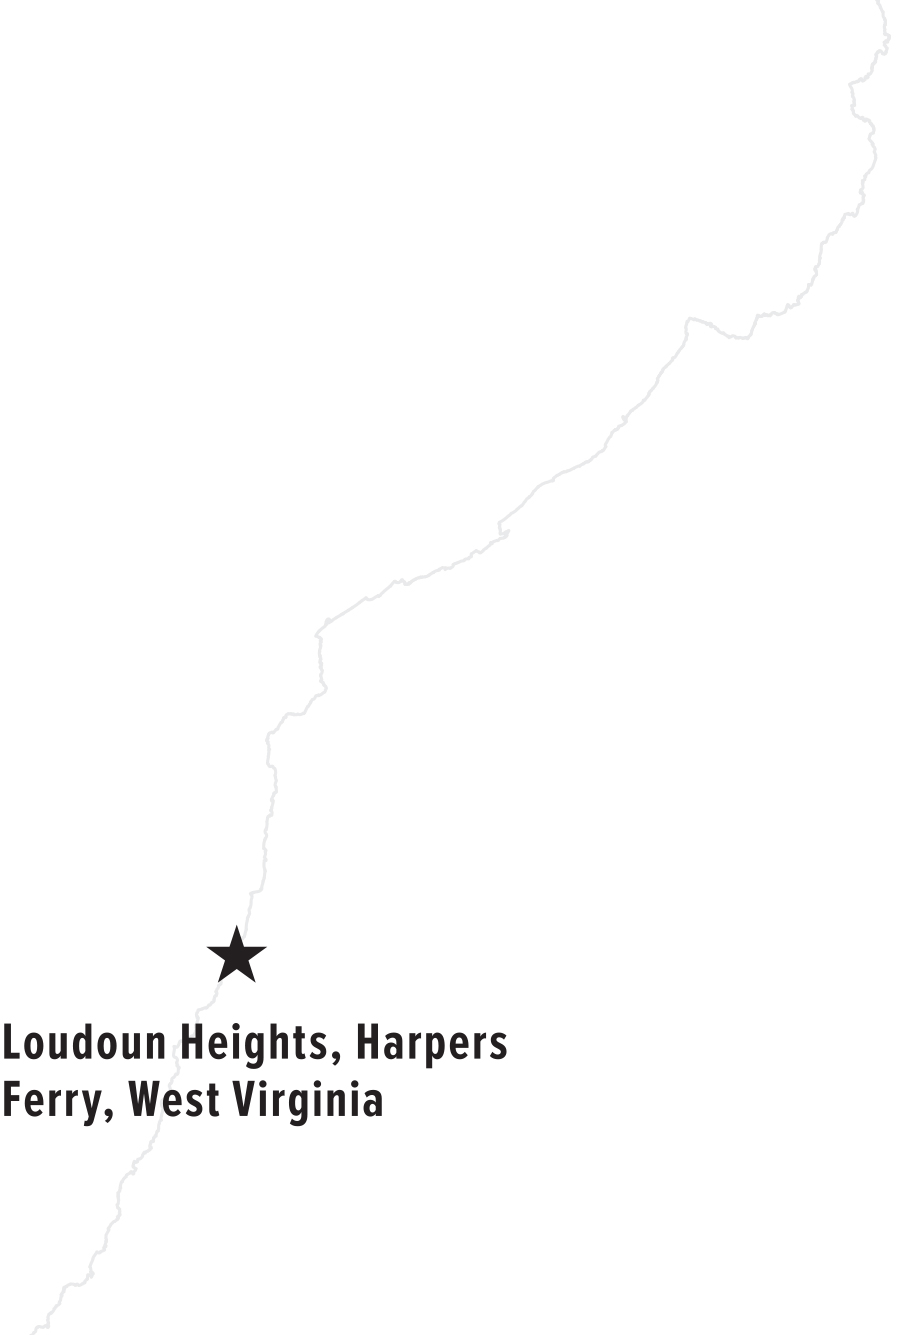 Loudoun Heights, Harpers Ferry, West Virginia